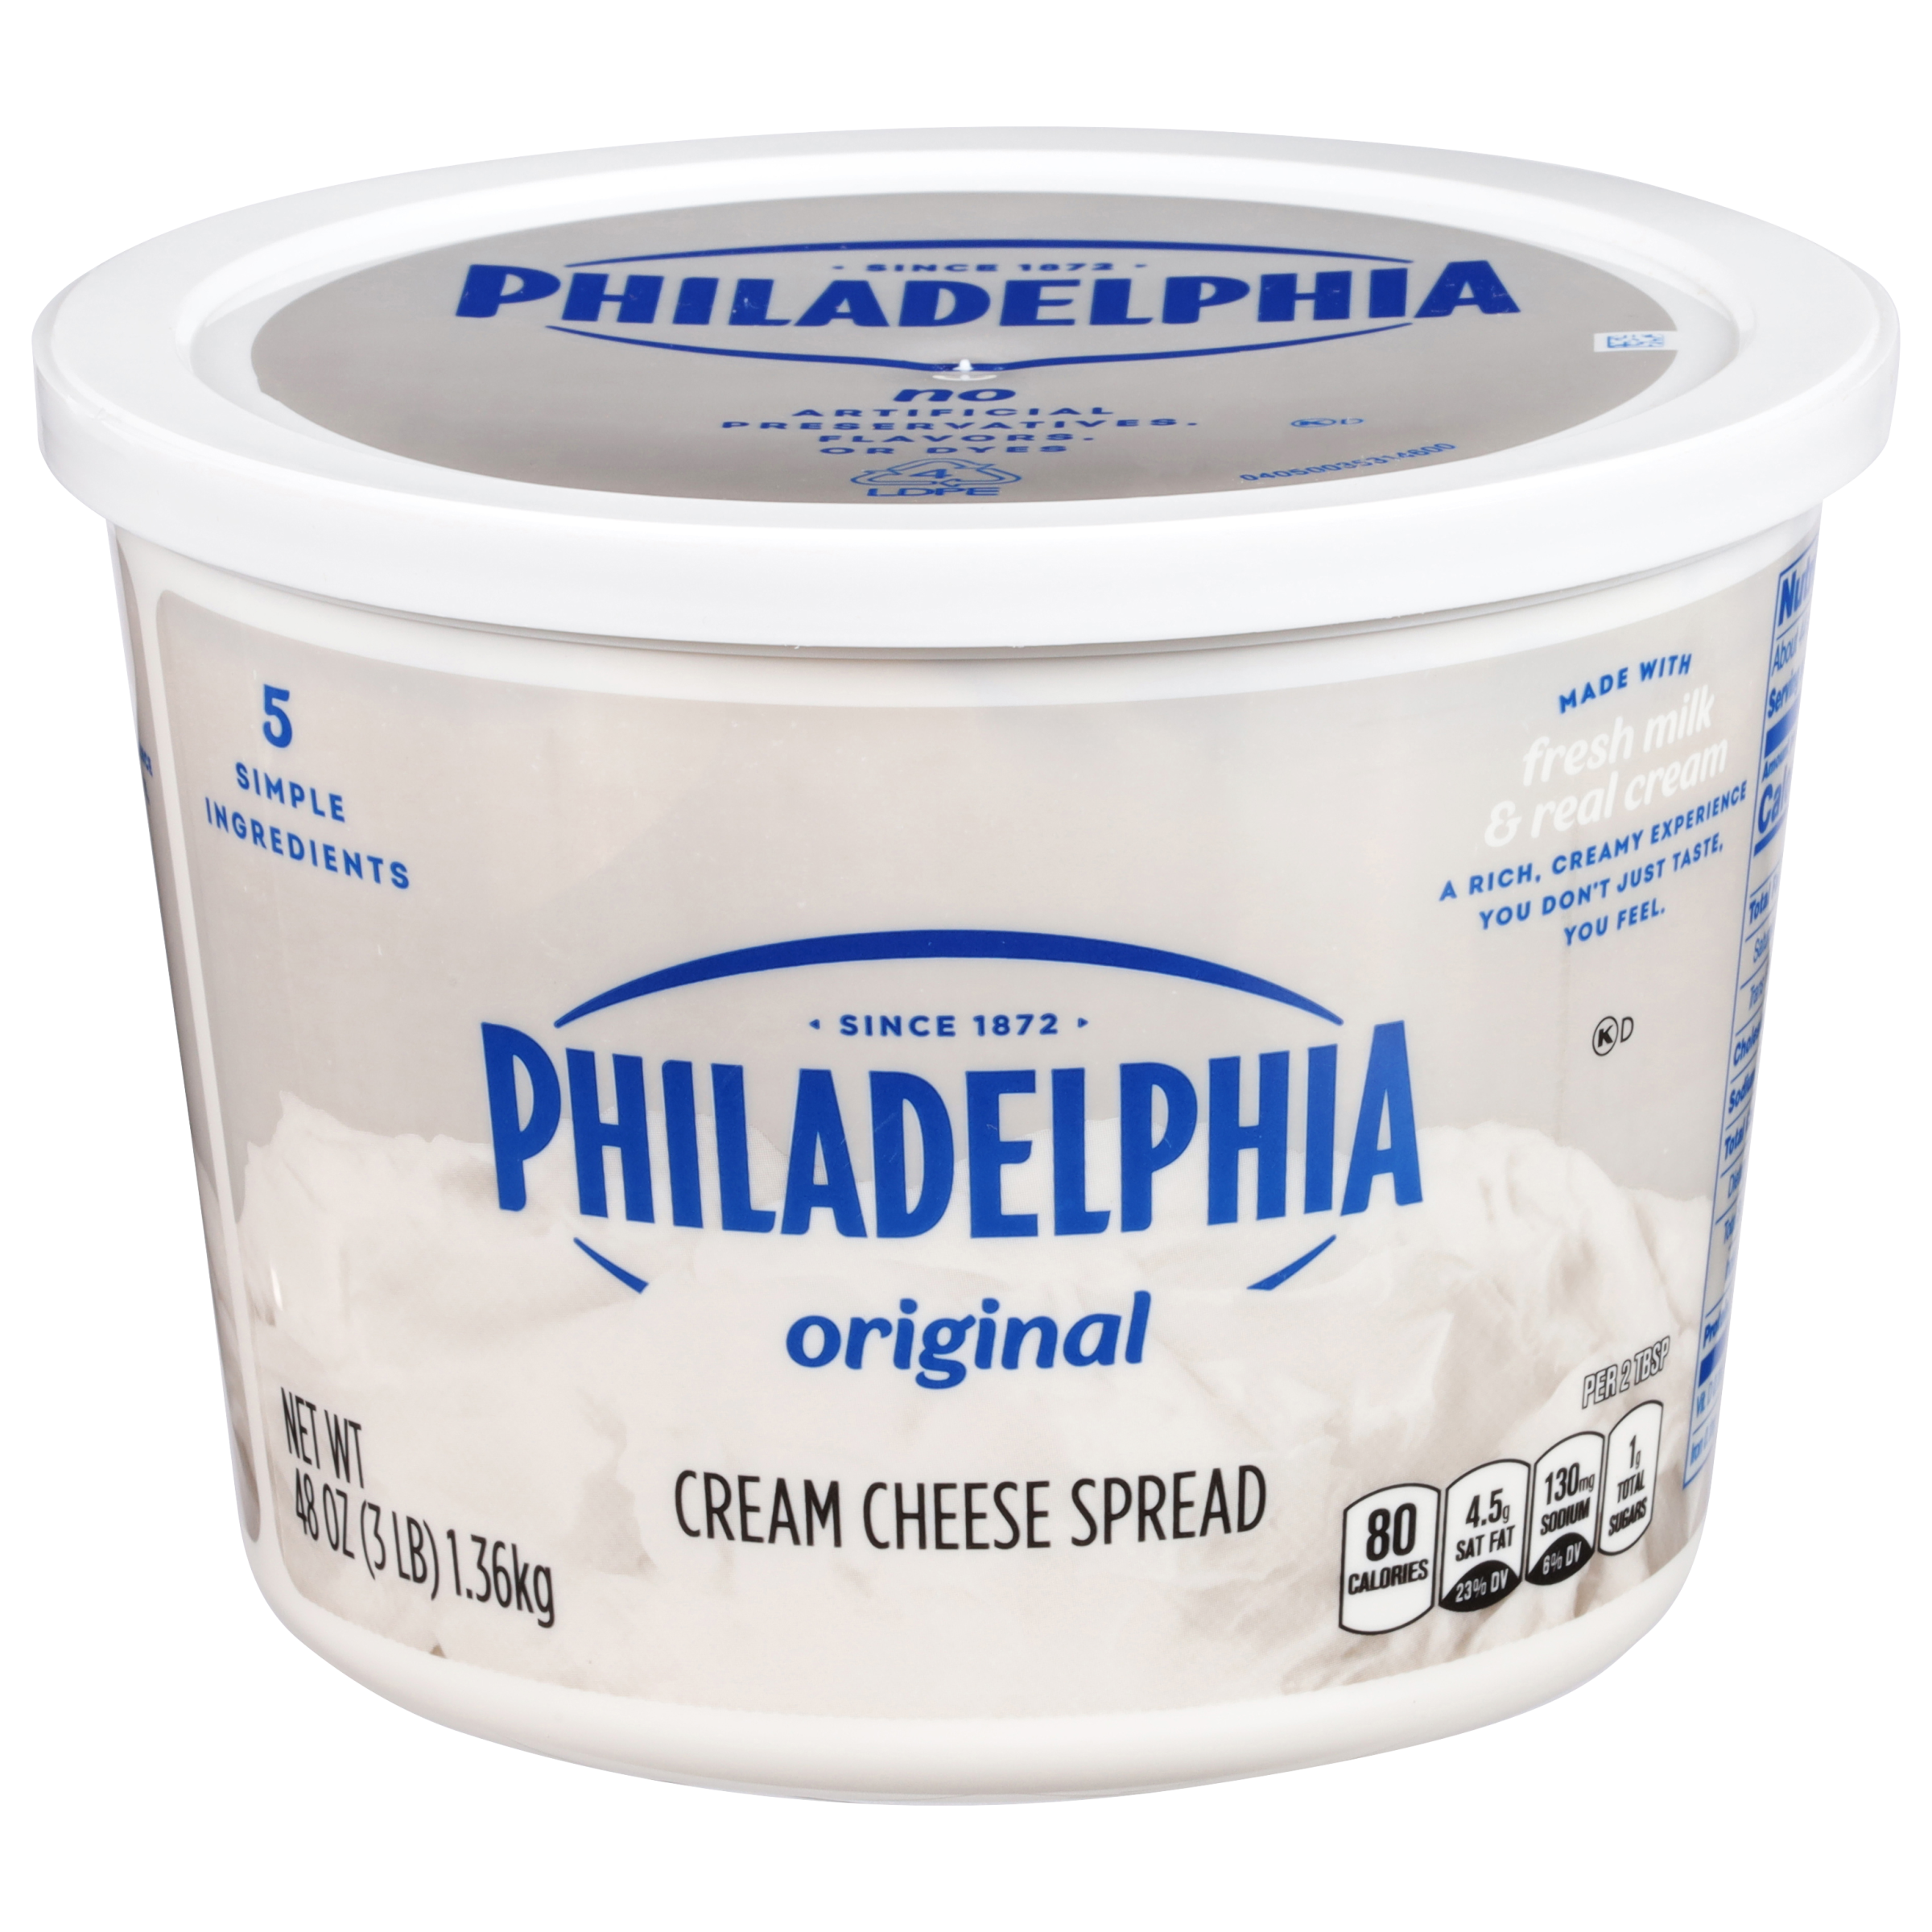 https://cdn.allotta.io/image/upload/v1693906229/dxp-images/afh/products/philadelphia-original-cream-cheese-spread-3-lb-tub-pack-of-6-10021000614063-en-US.png